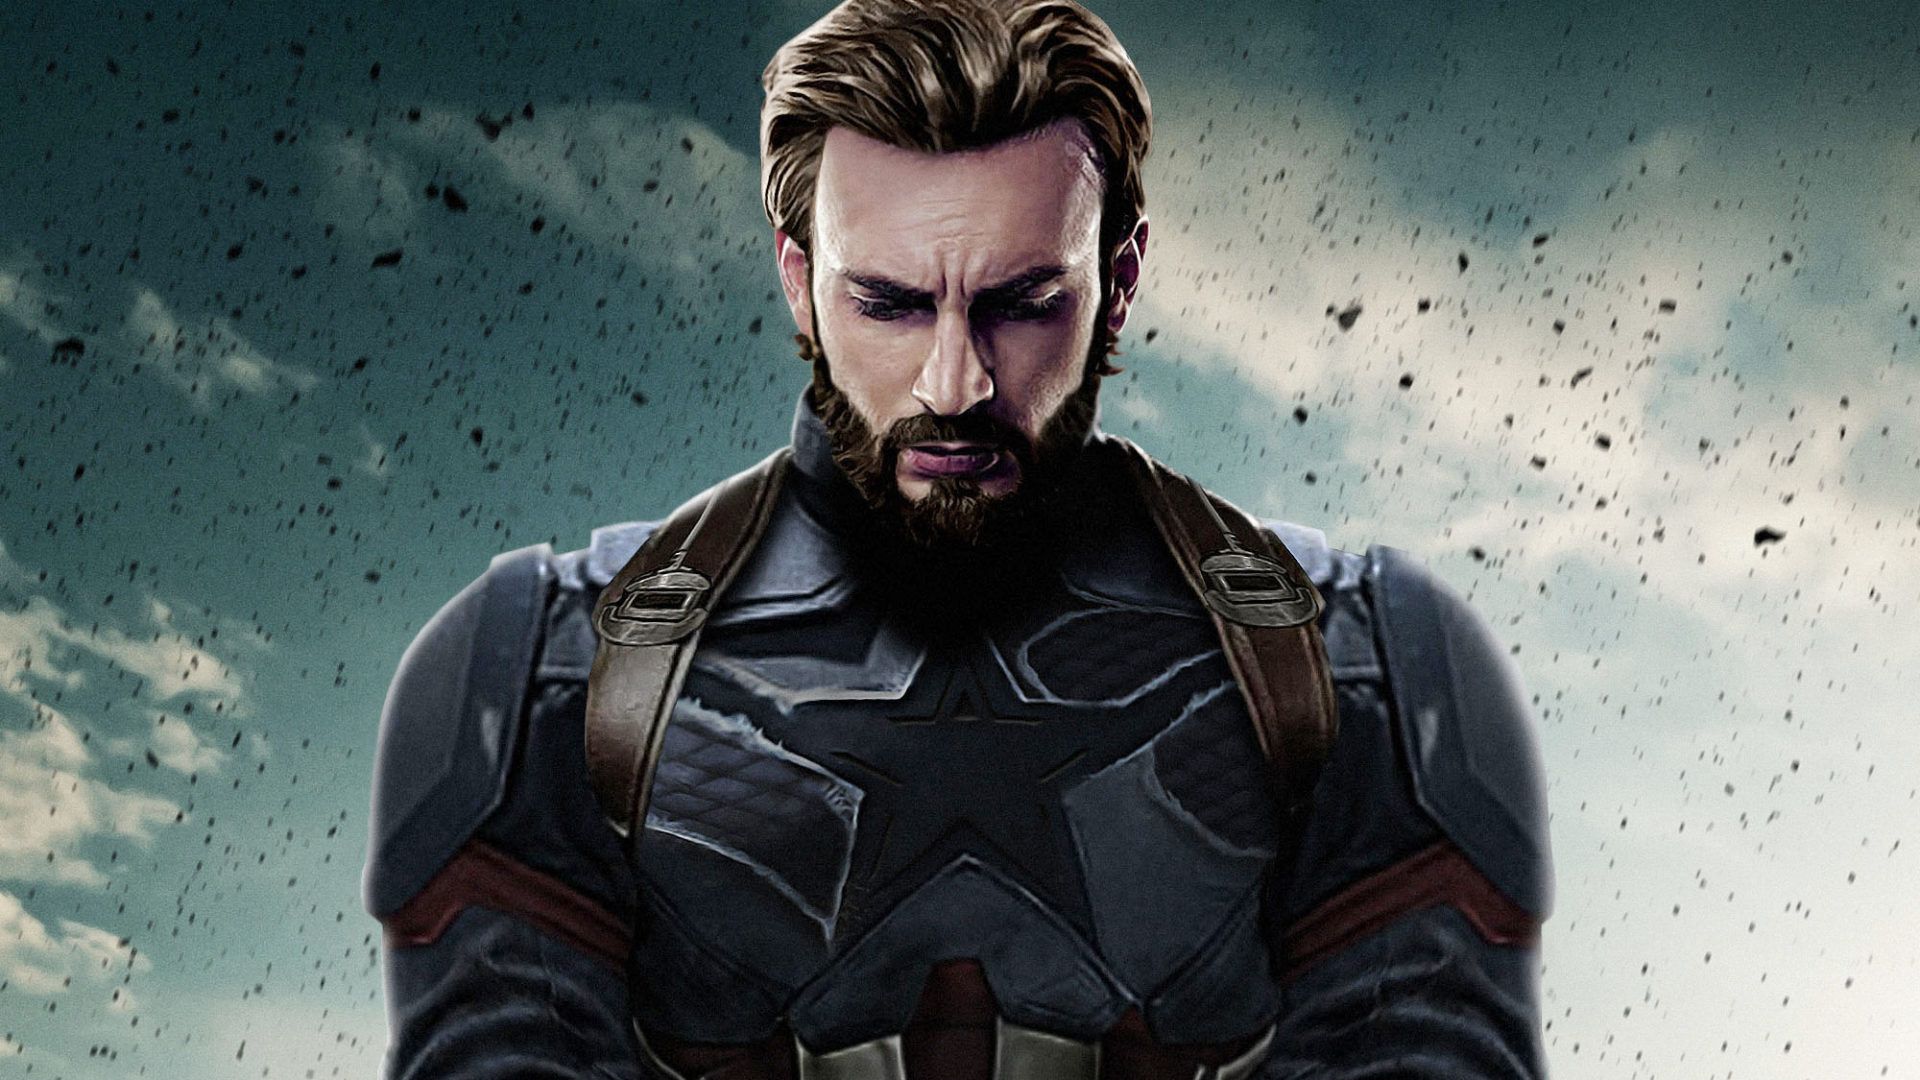 Captain America Infinity War Wallpaper .wallpaperaccess.com